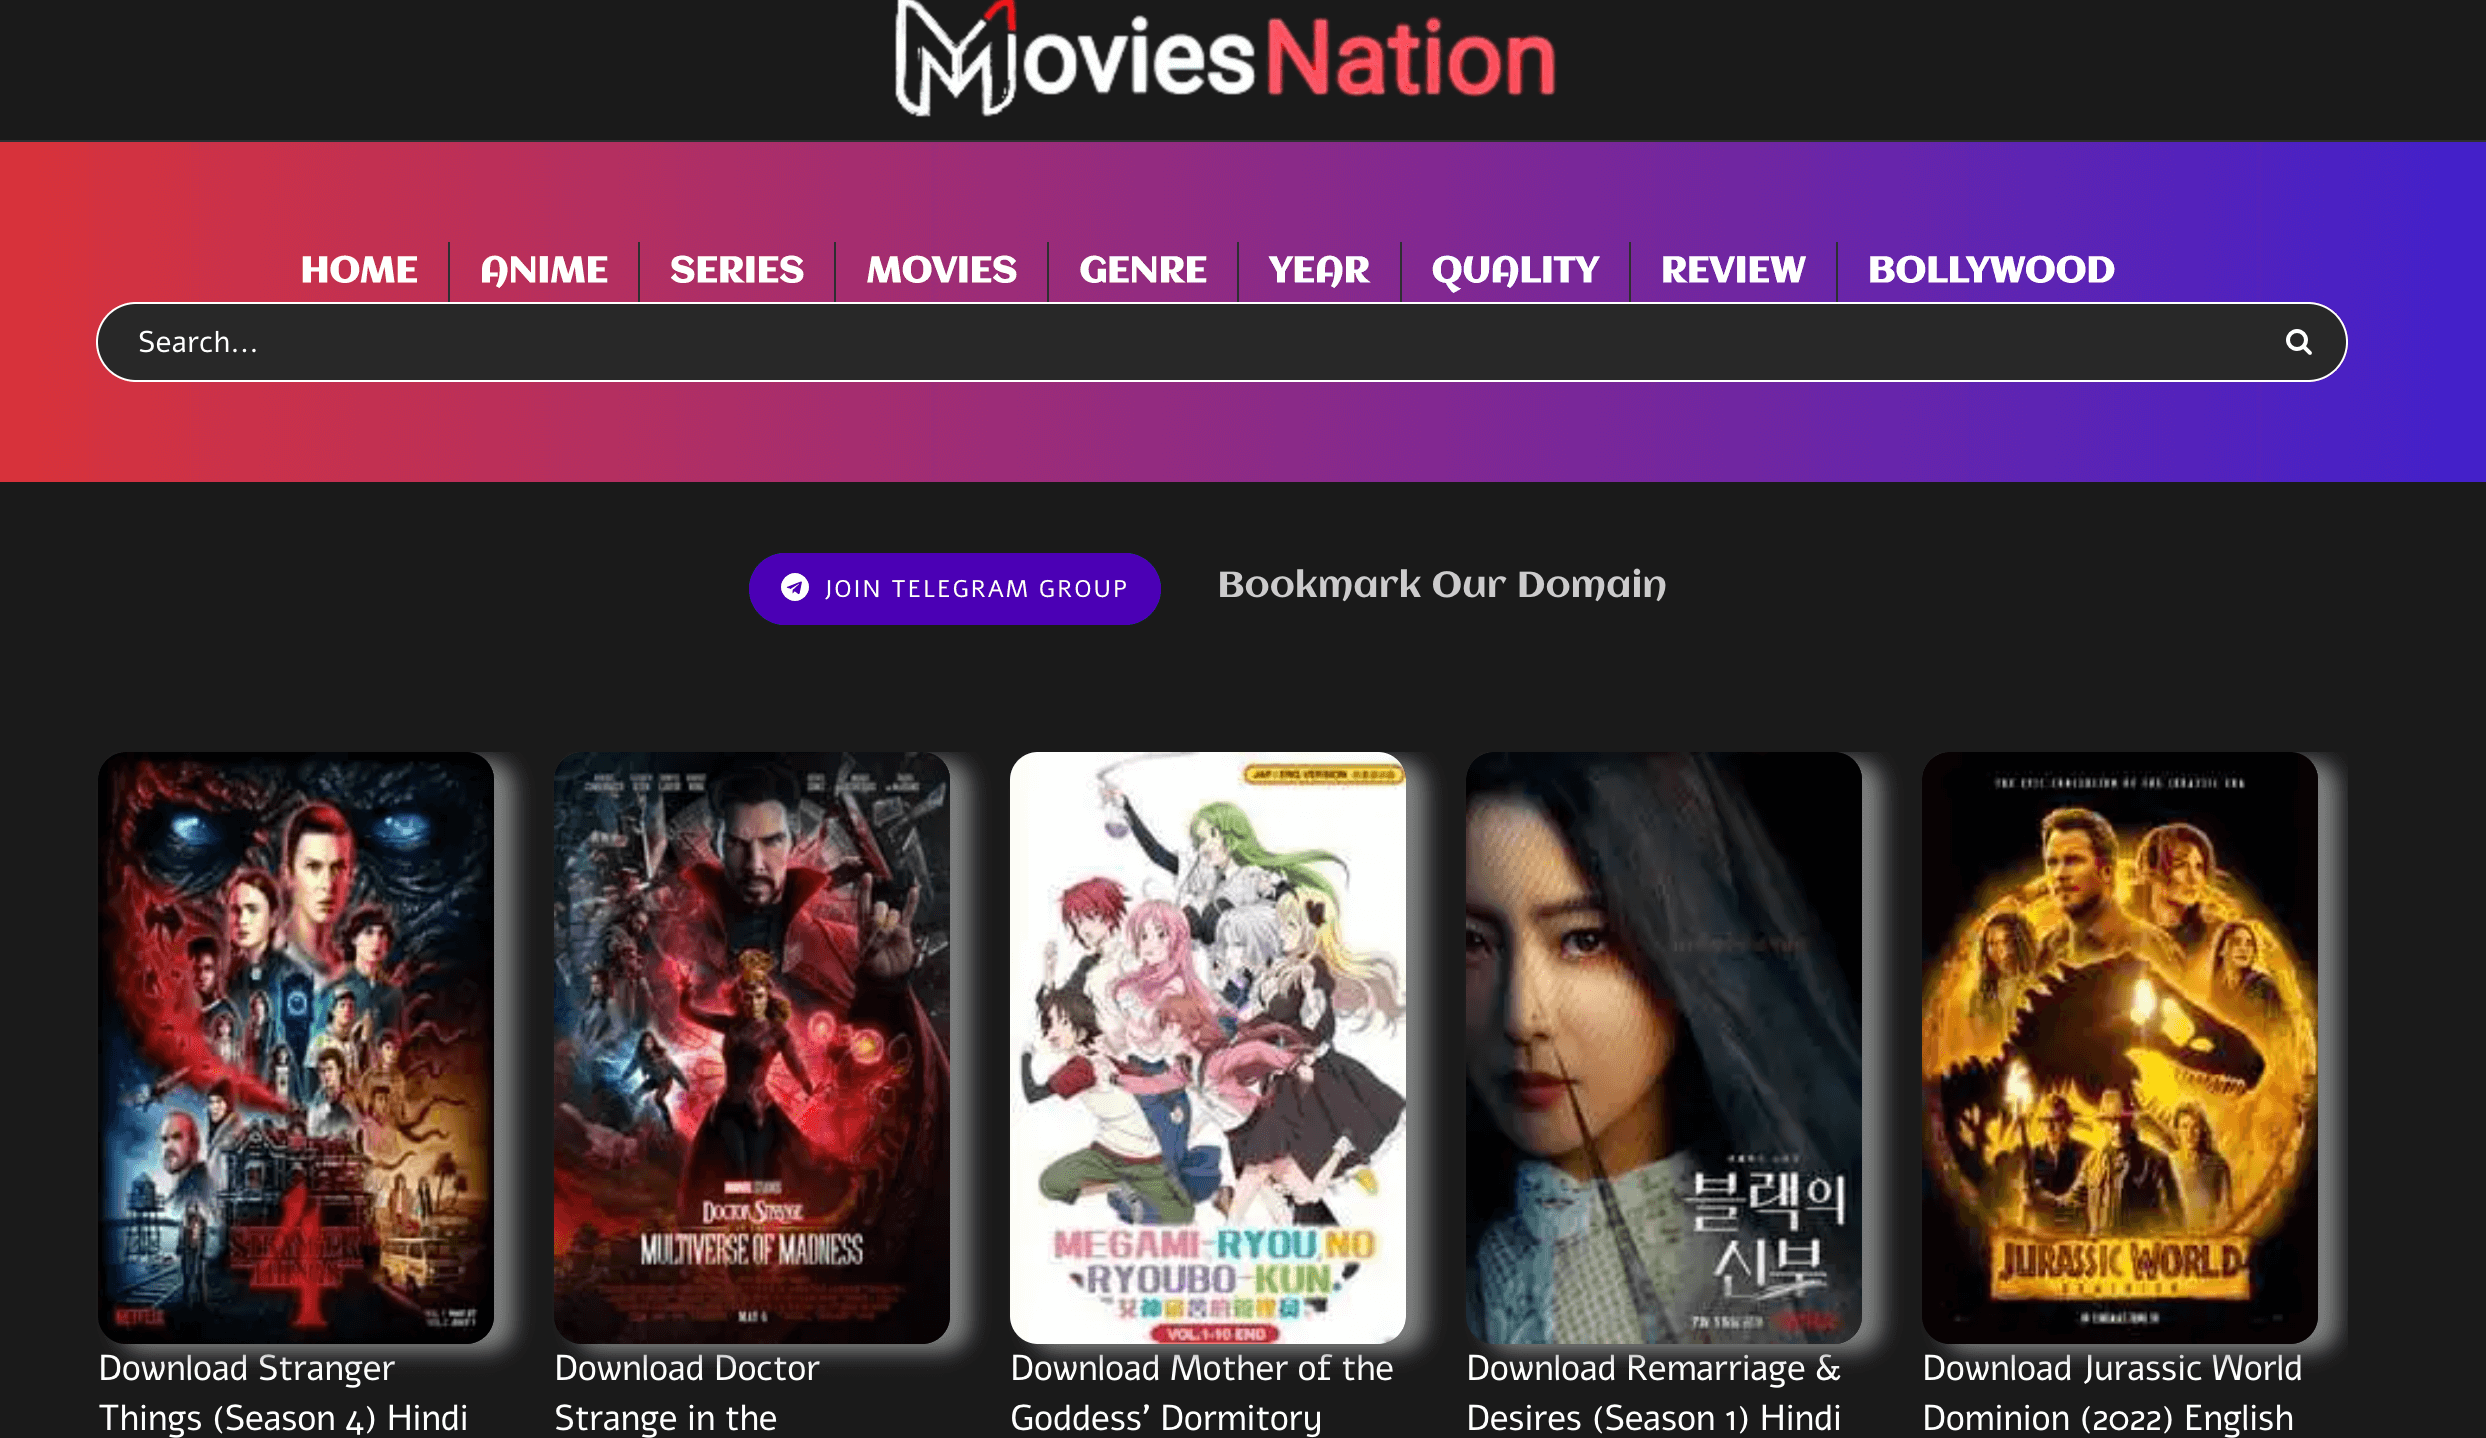 moviesnation homepage